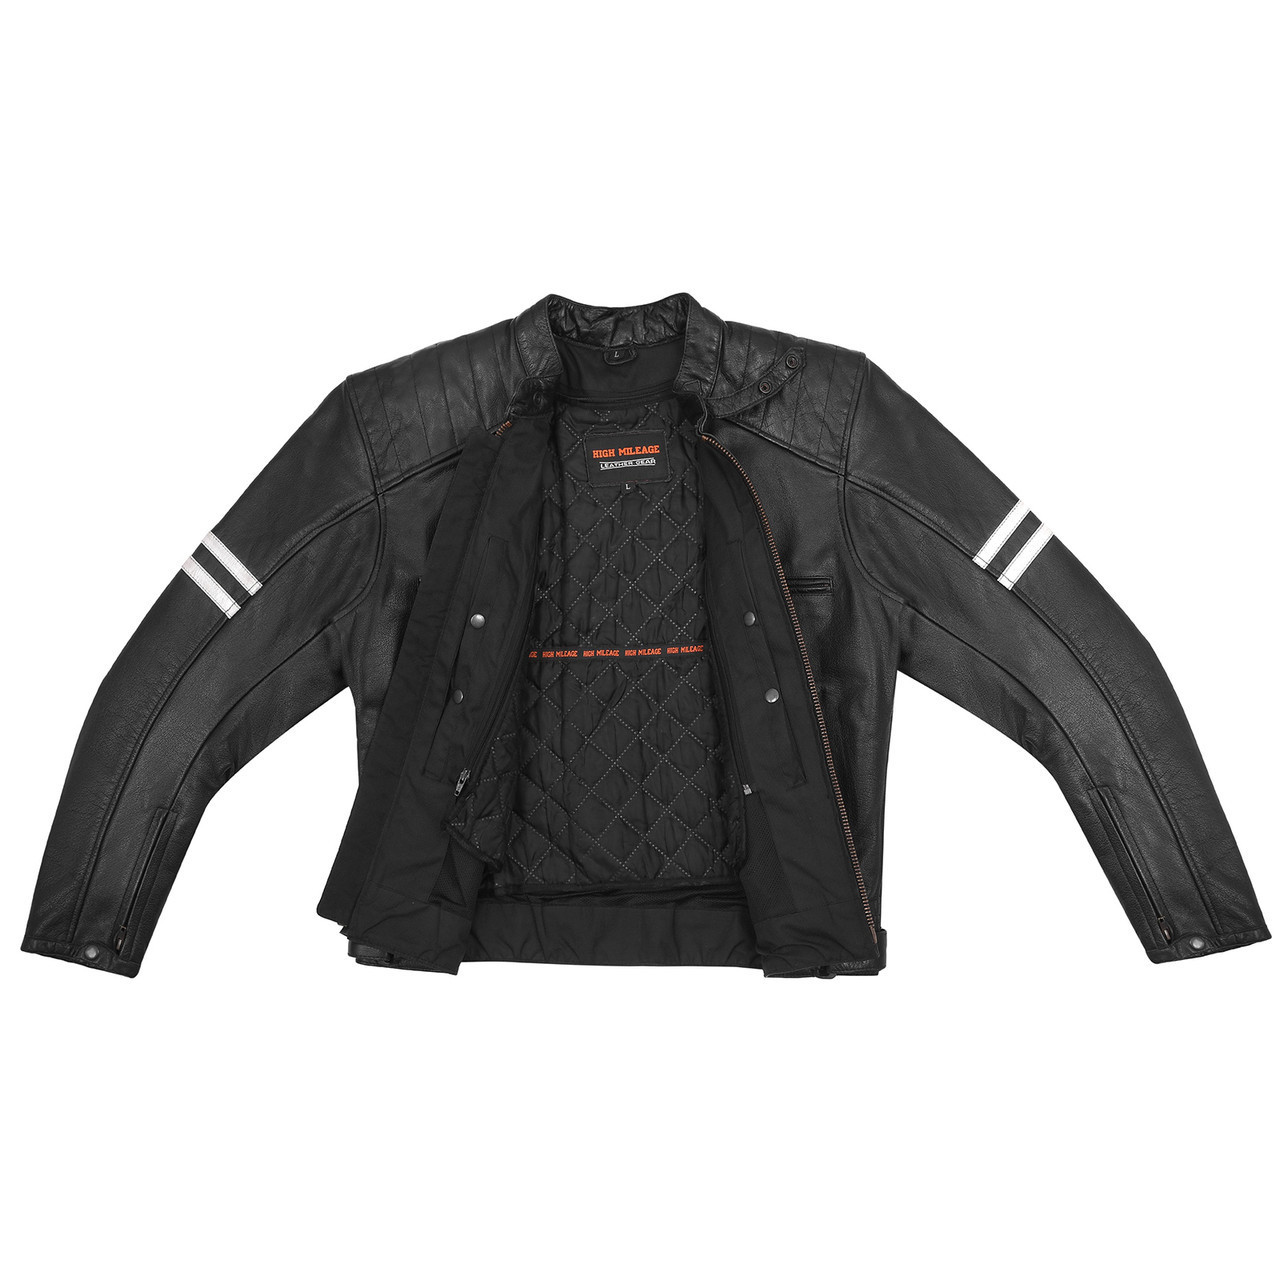 DIESEL Multi-patches Biker Jacket in Black for Men